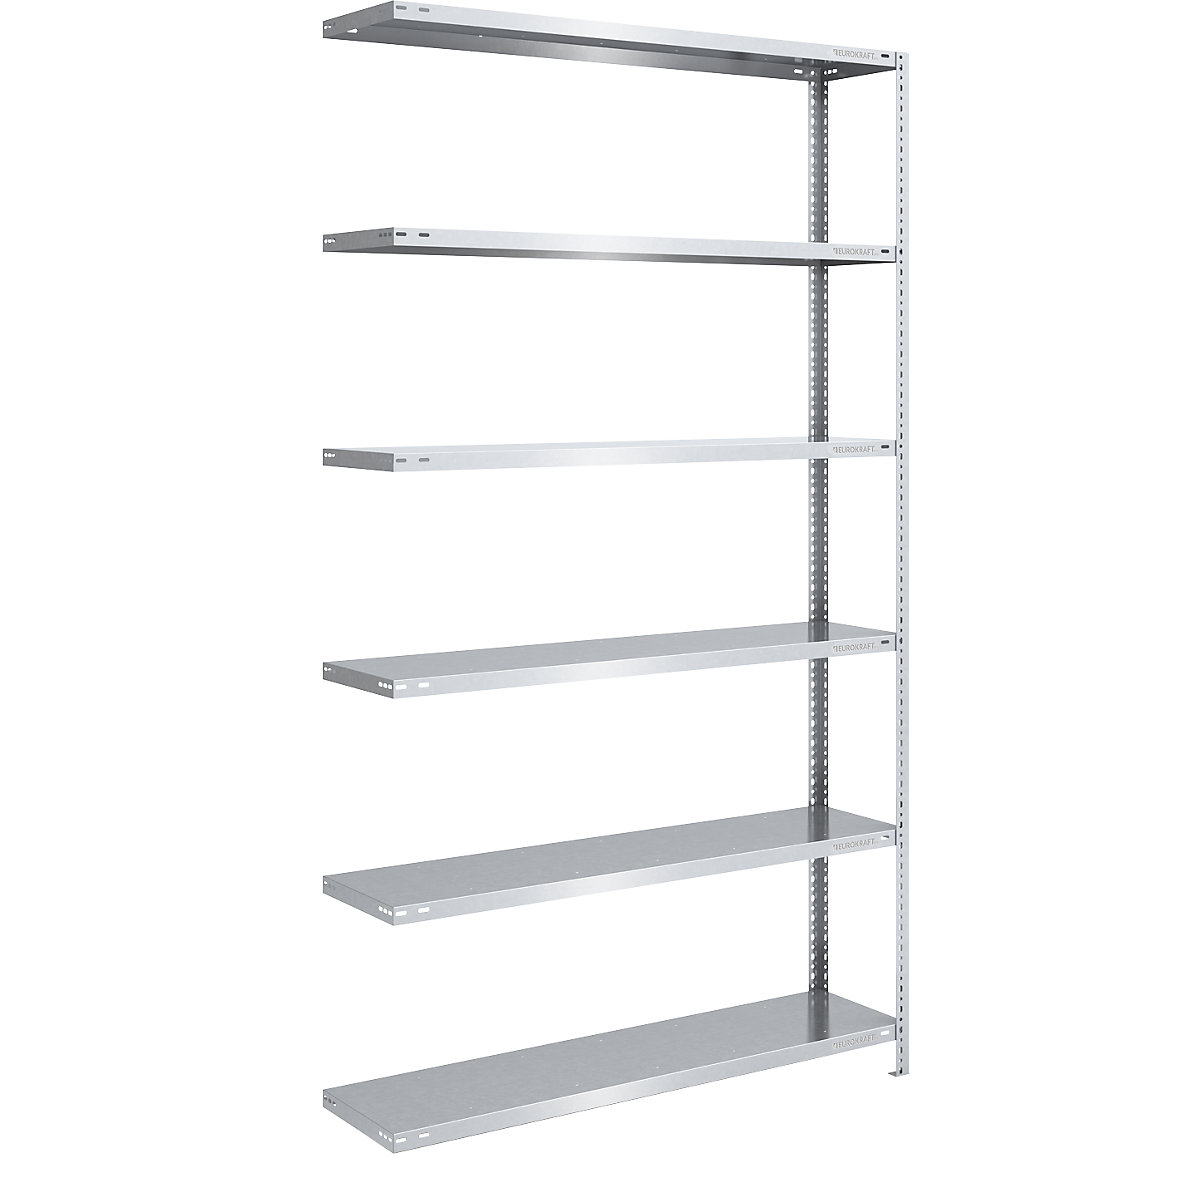 Bolt-together storage shelving, zinc plated, medium duty – eurokraft pro, shelf unit height 2500 mm, shelf width 1300 mm, depth 400 mm, extension shelf unit-13